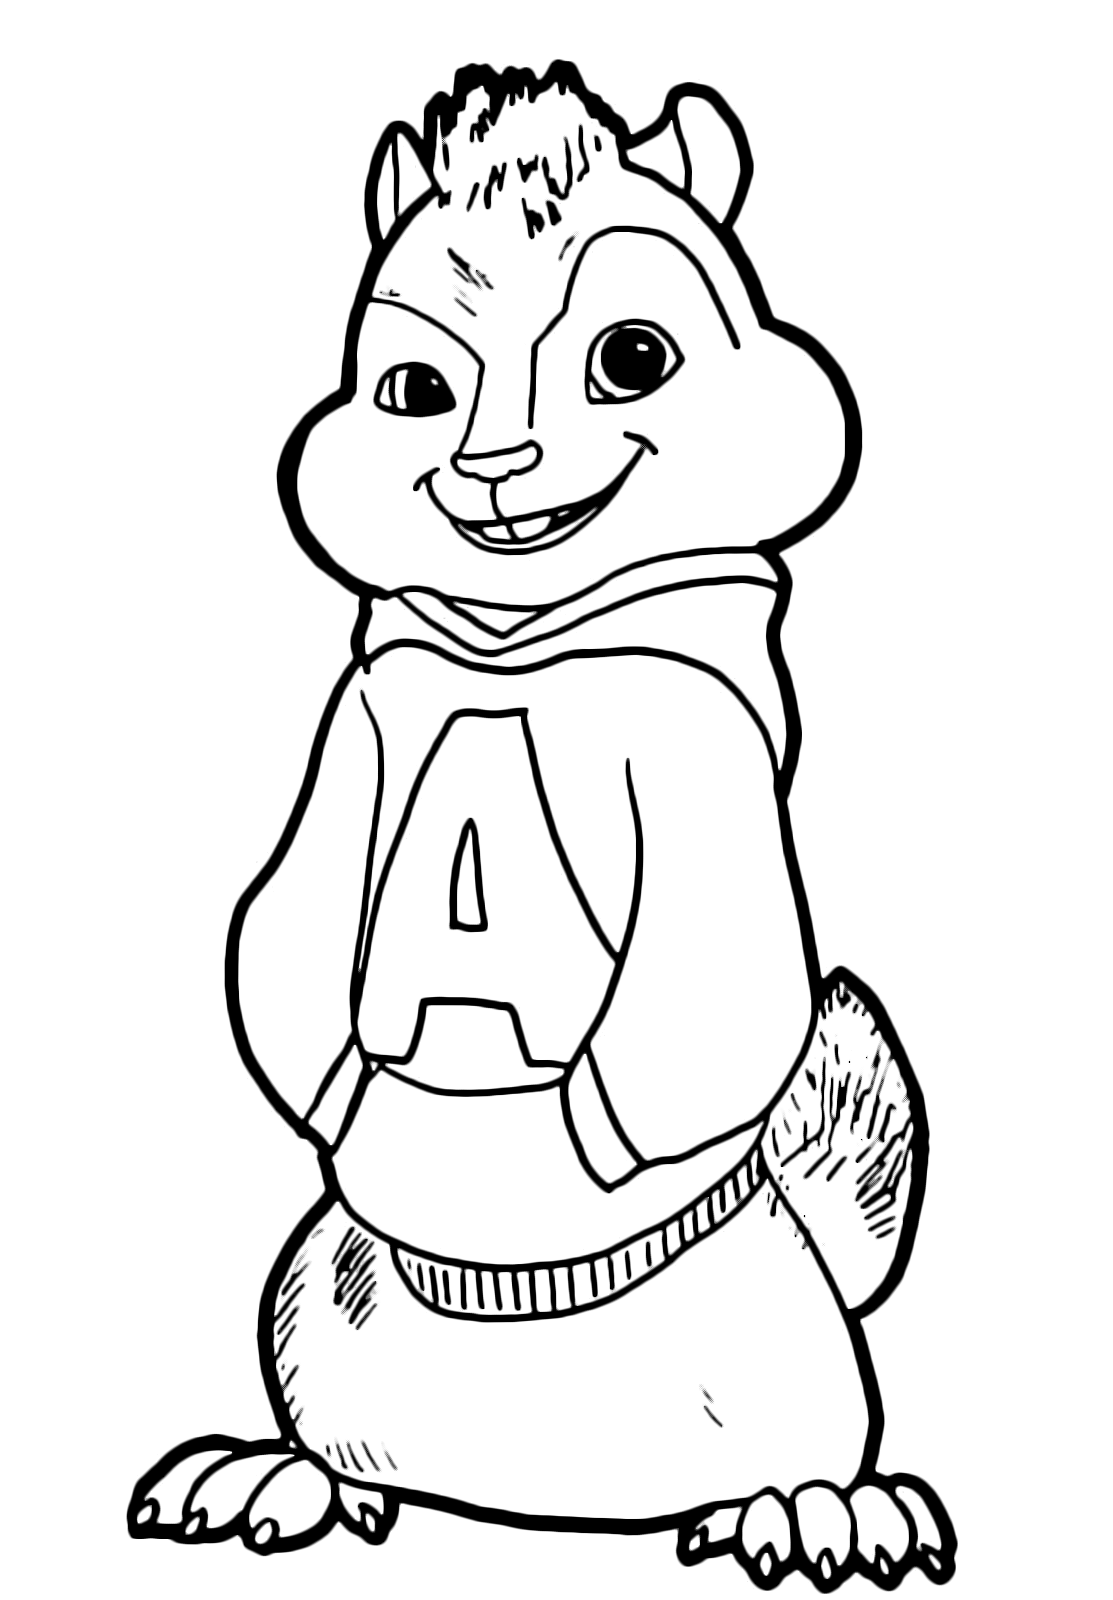 Alvin and the Chipmunks - Alvin Superstar